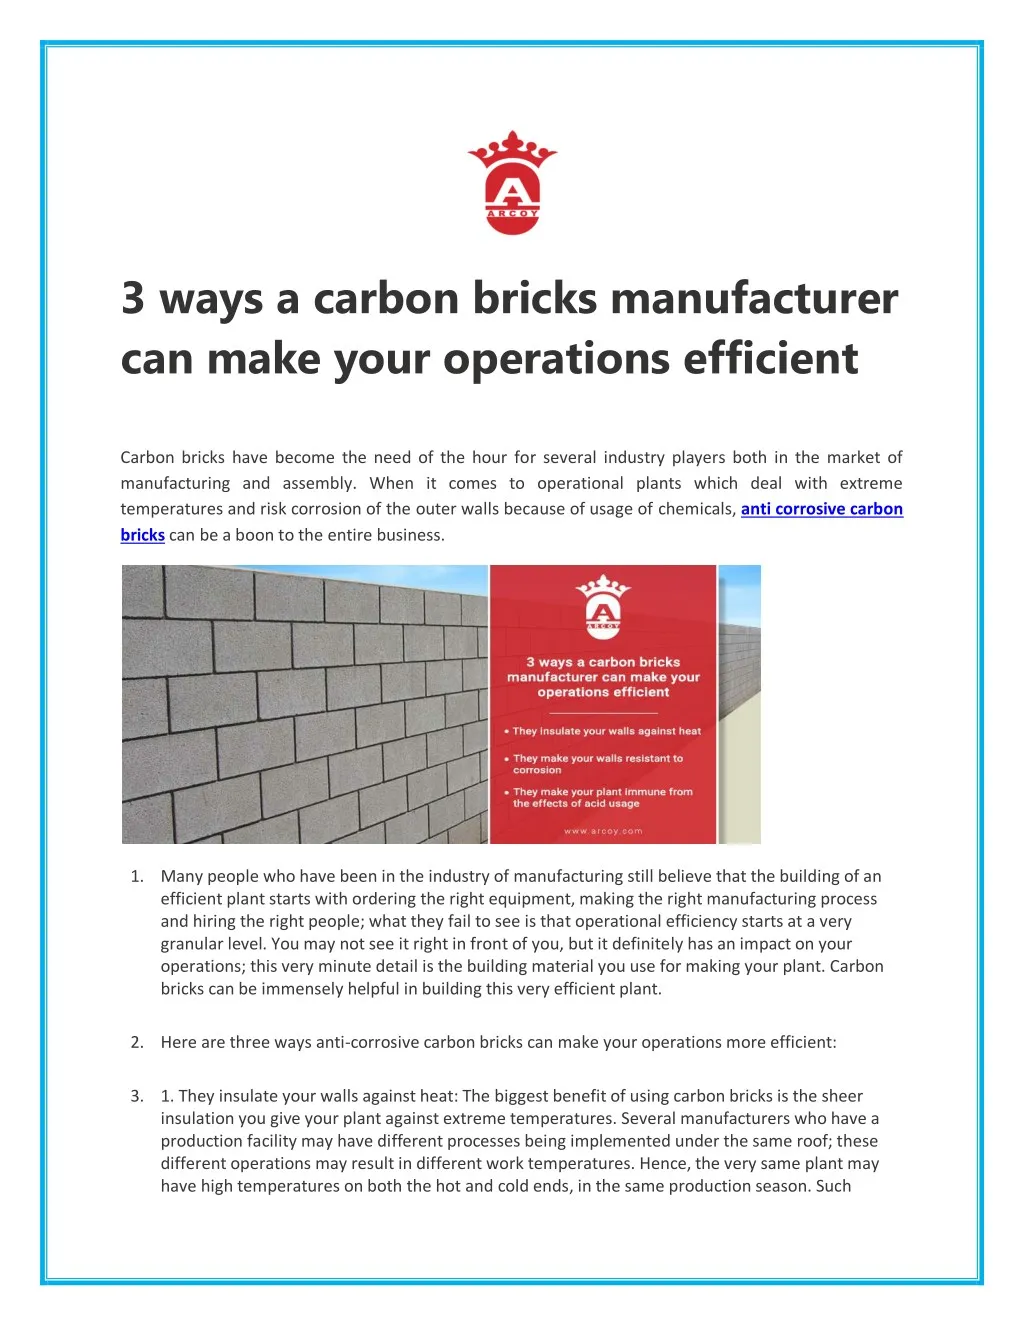 3 ways a carbon bricks manufacturer can make your